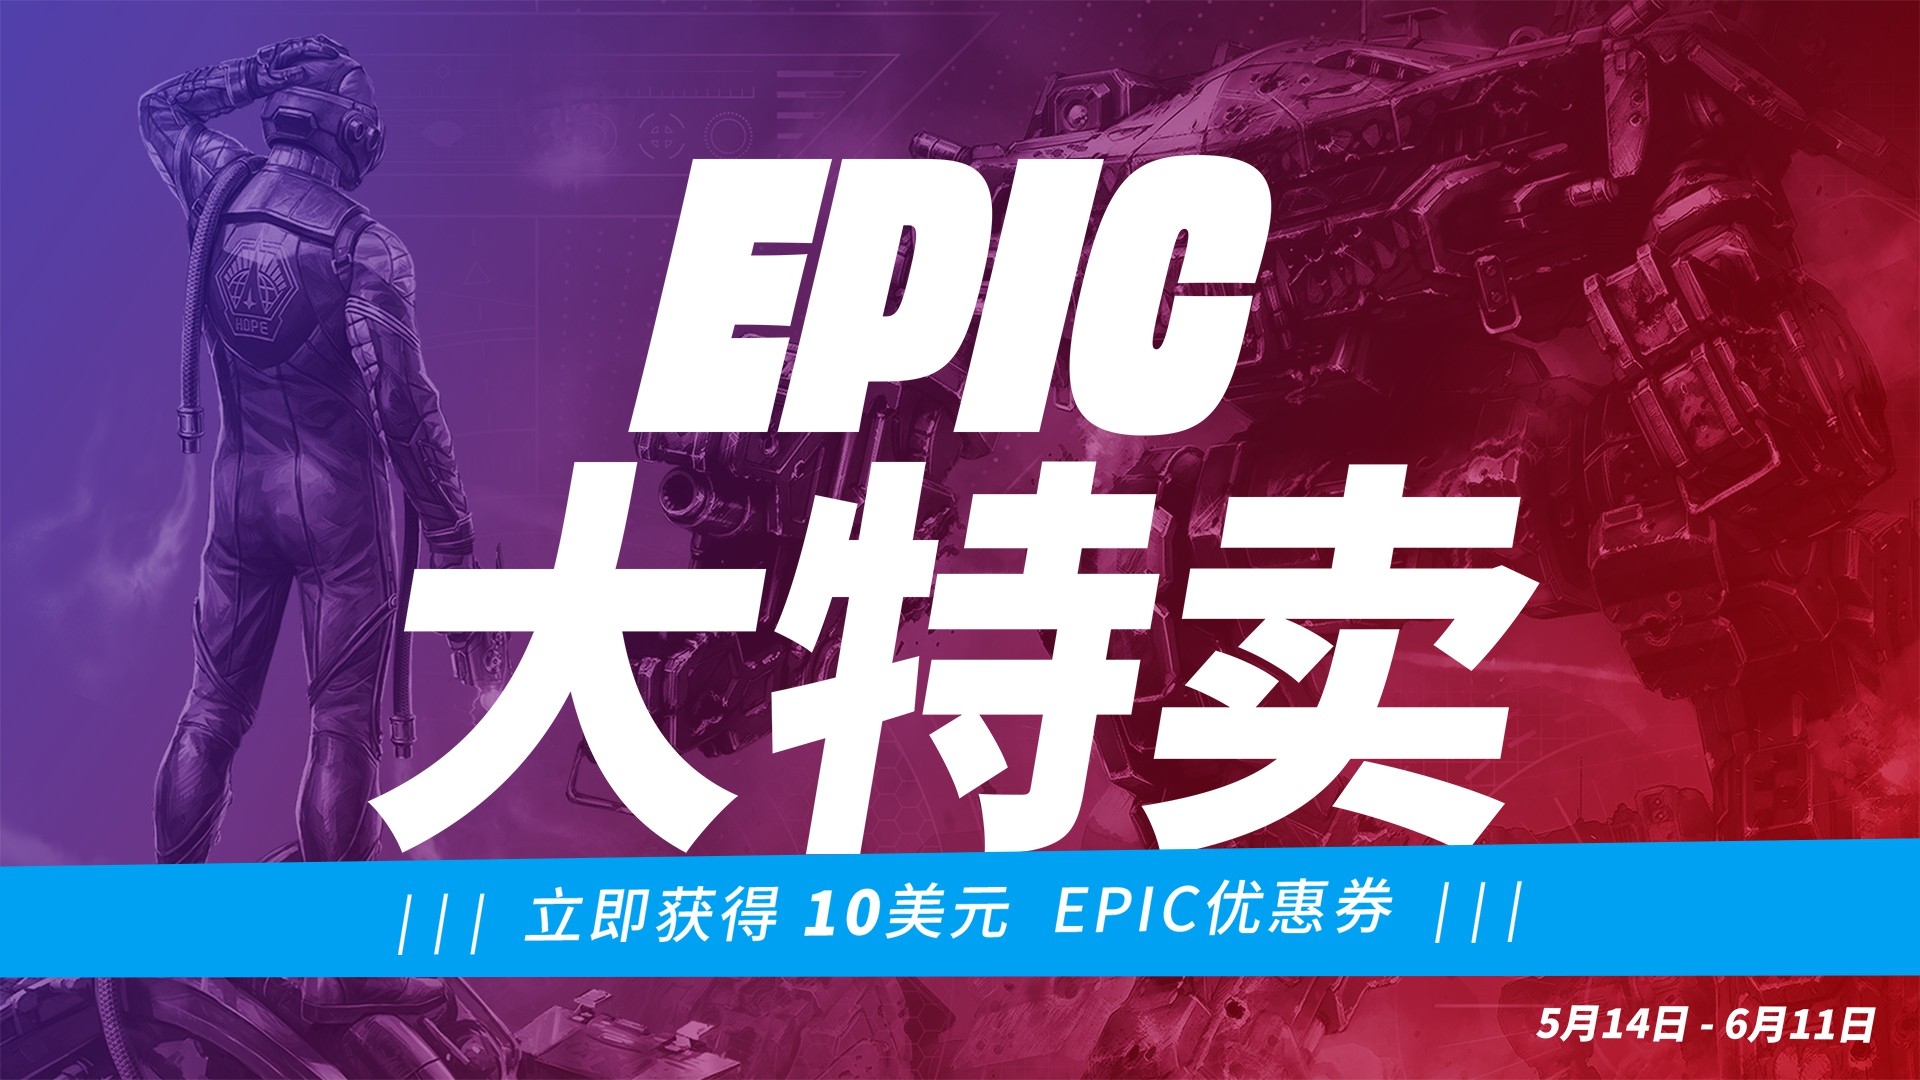 EPIC特卖活动期间每周四晚11点都会送一款游戏